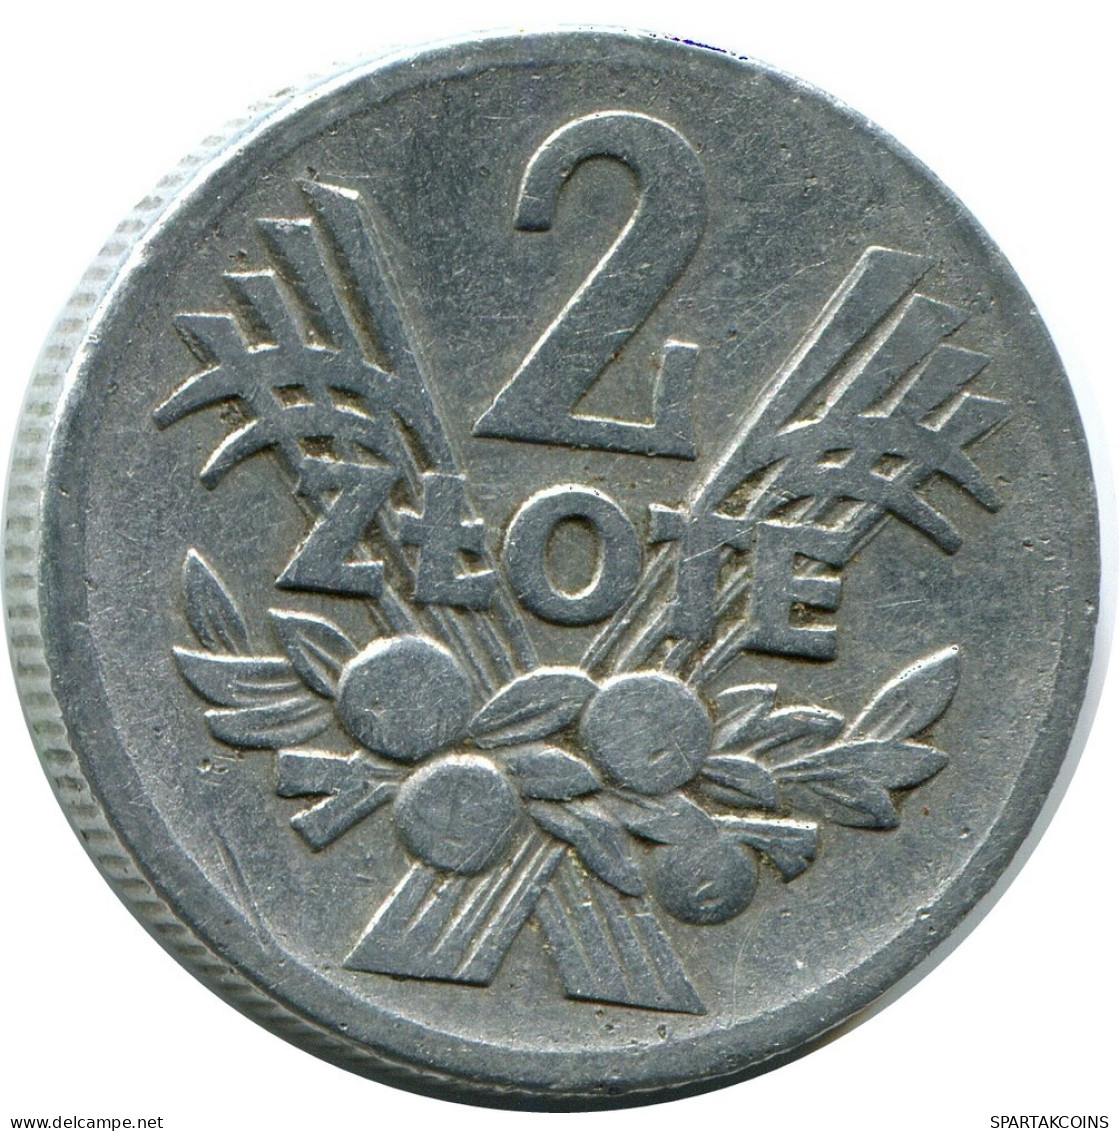 2 ZLOTE 1958 POLAND Coin #AZ317.U.A - Polonia